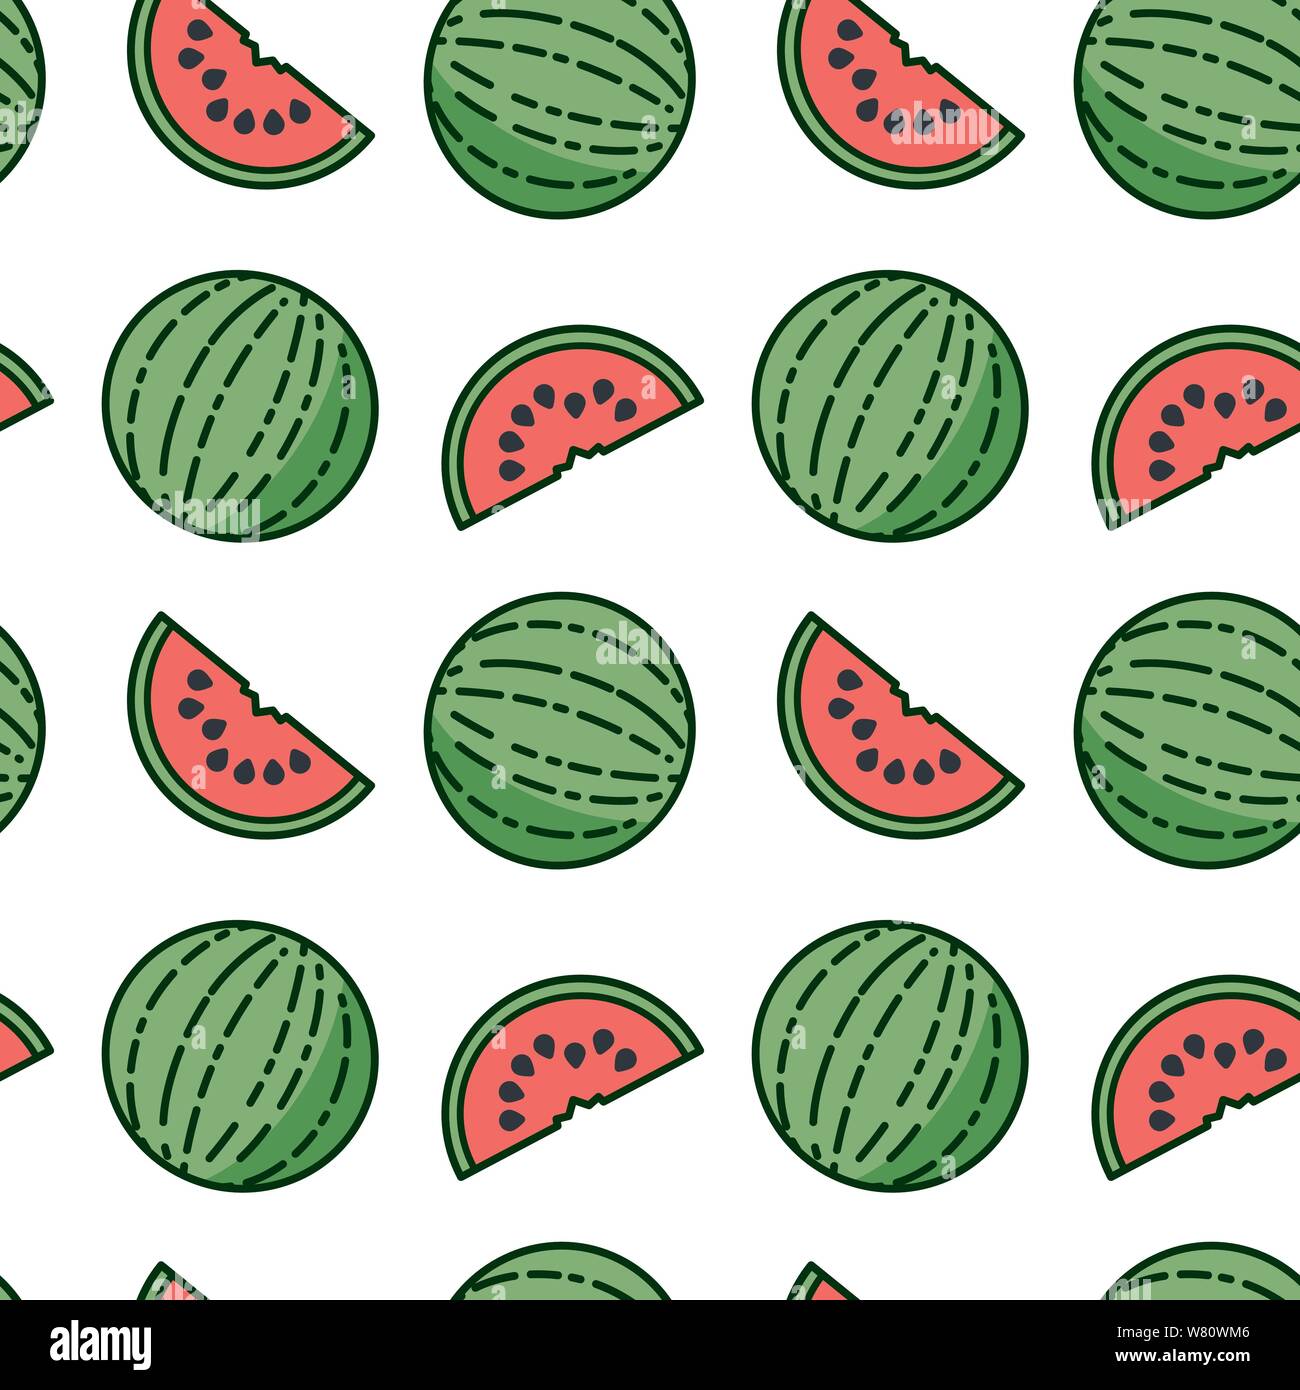 Wassermelone nahtlose Muster Vektor-illustration, frisches Obst Symbole Tapete. Stock Vektor